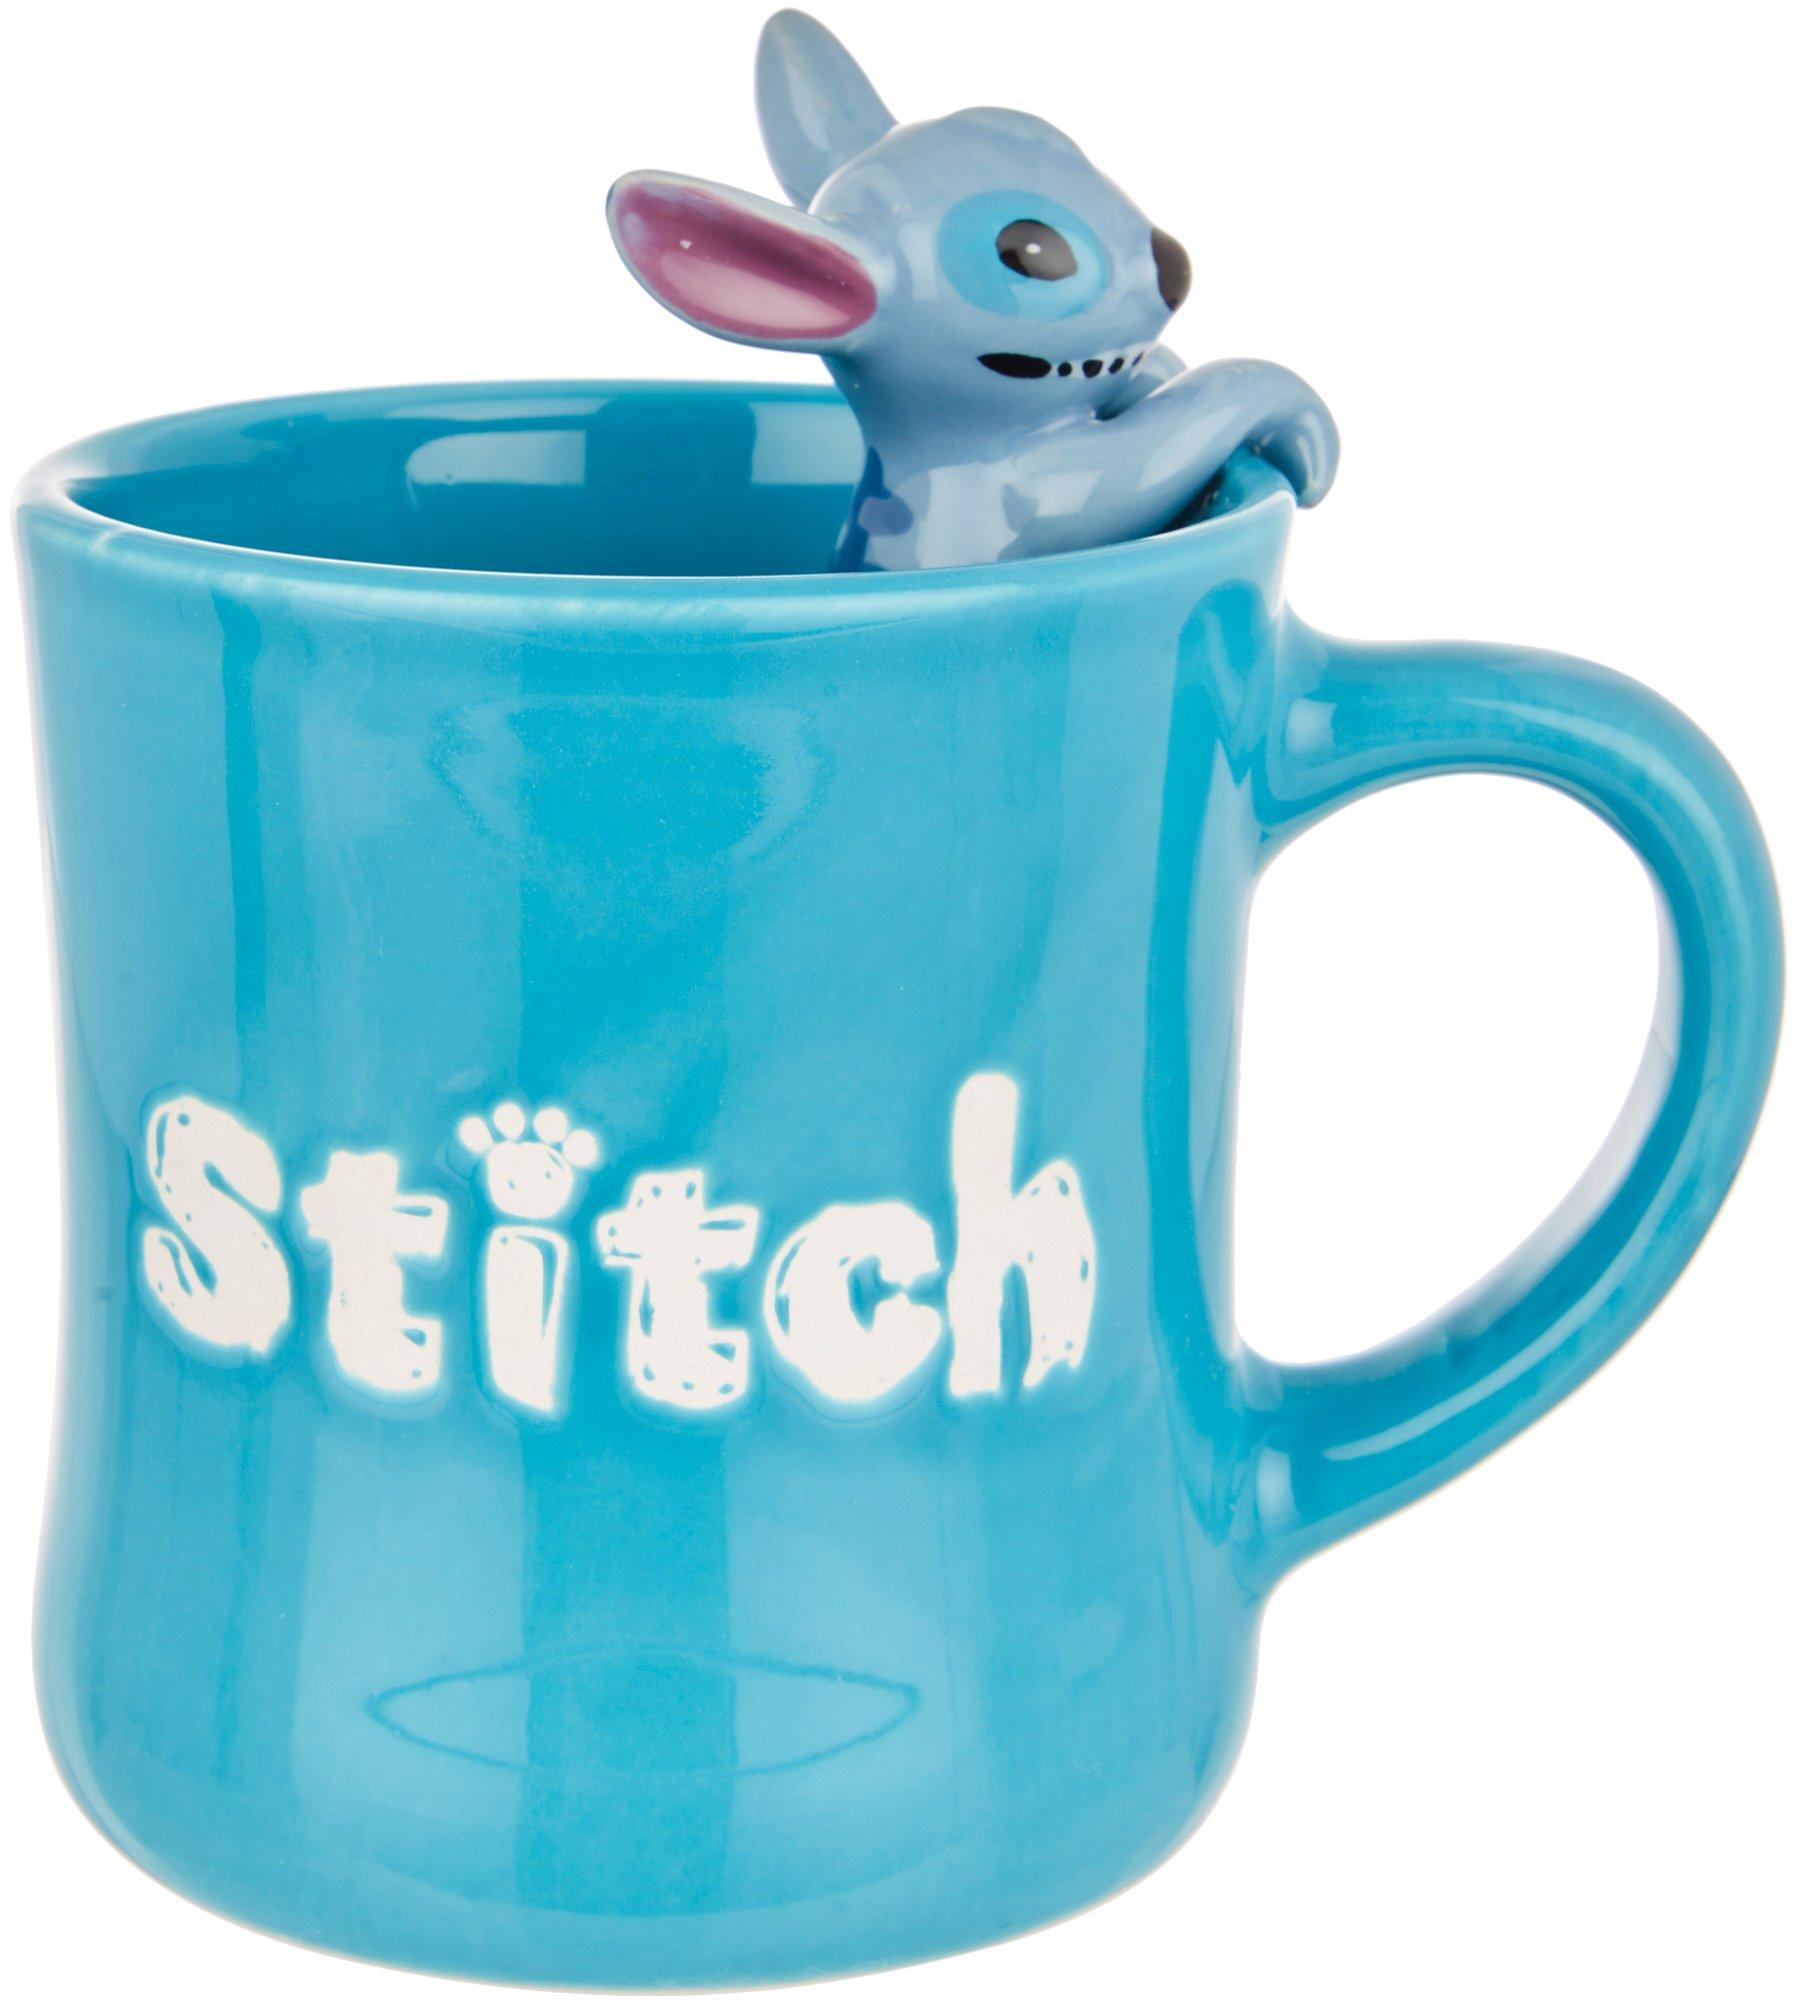 Stitch Character Ceramic Coffee Mug